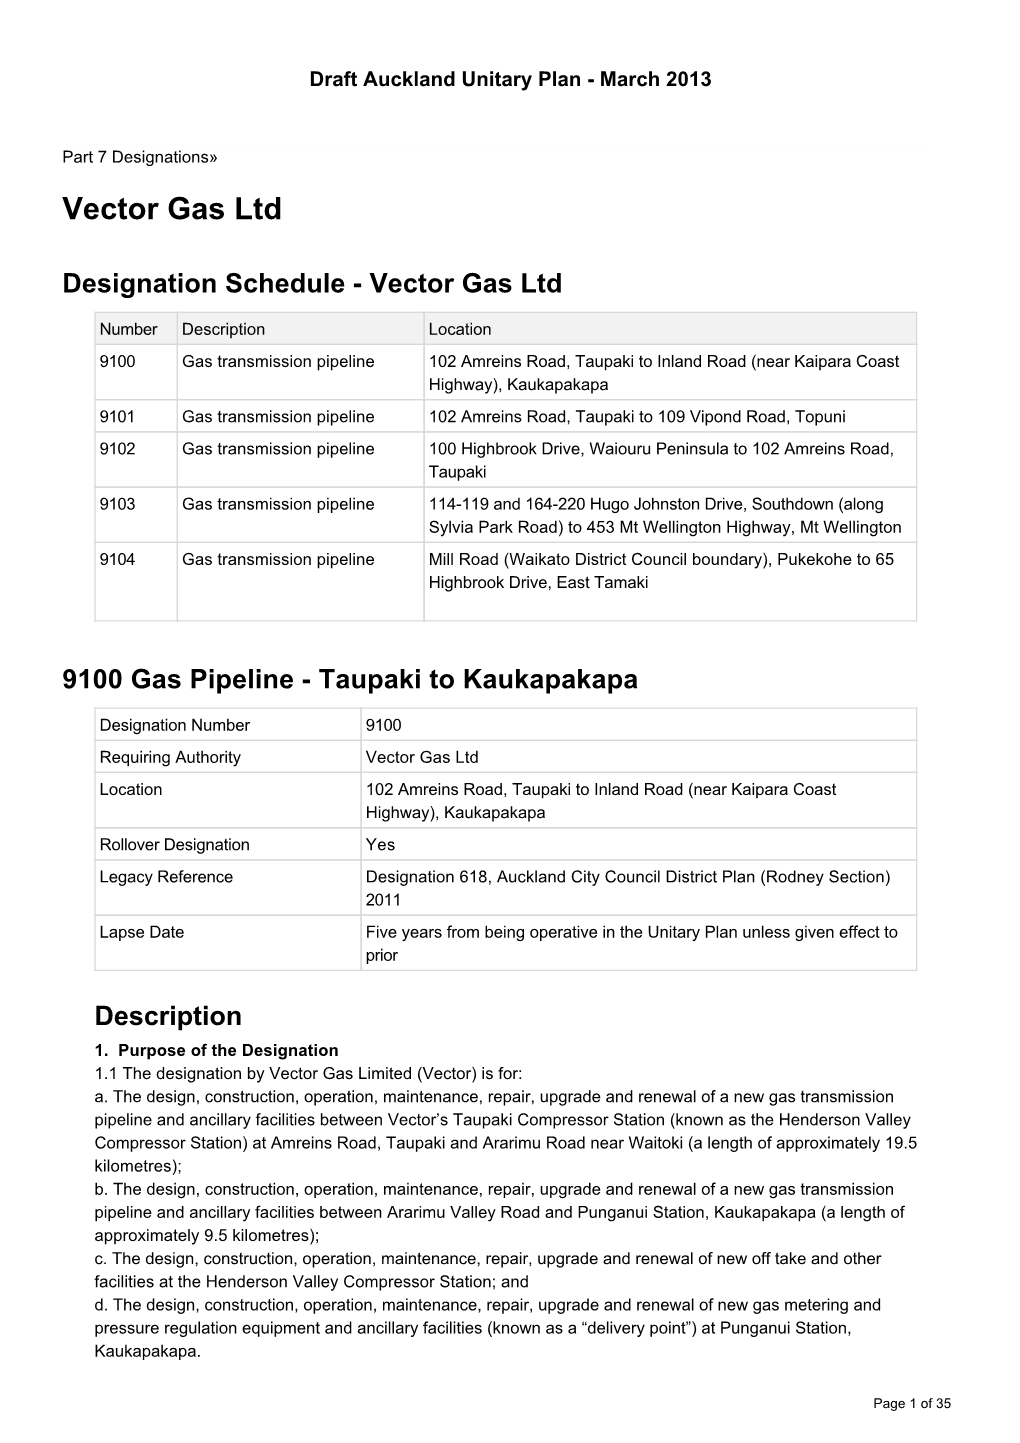 Vector Gas Ltd